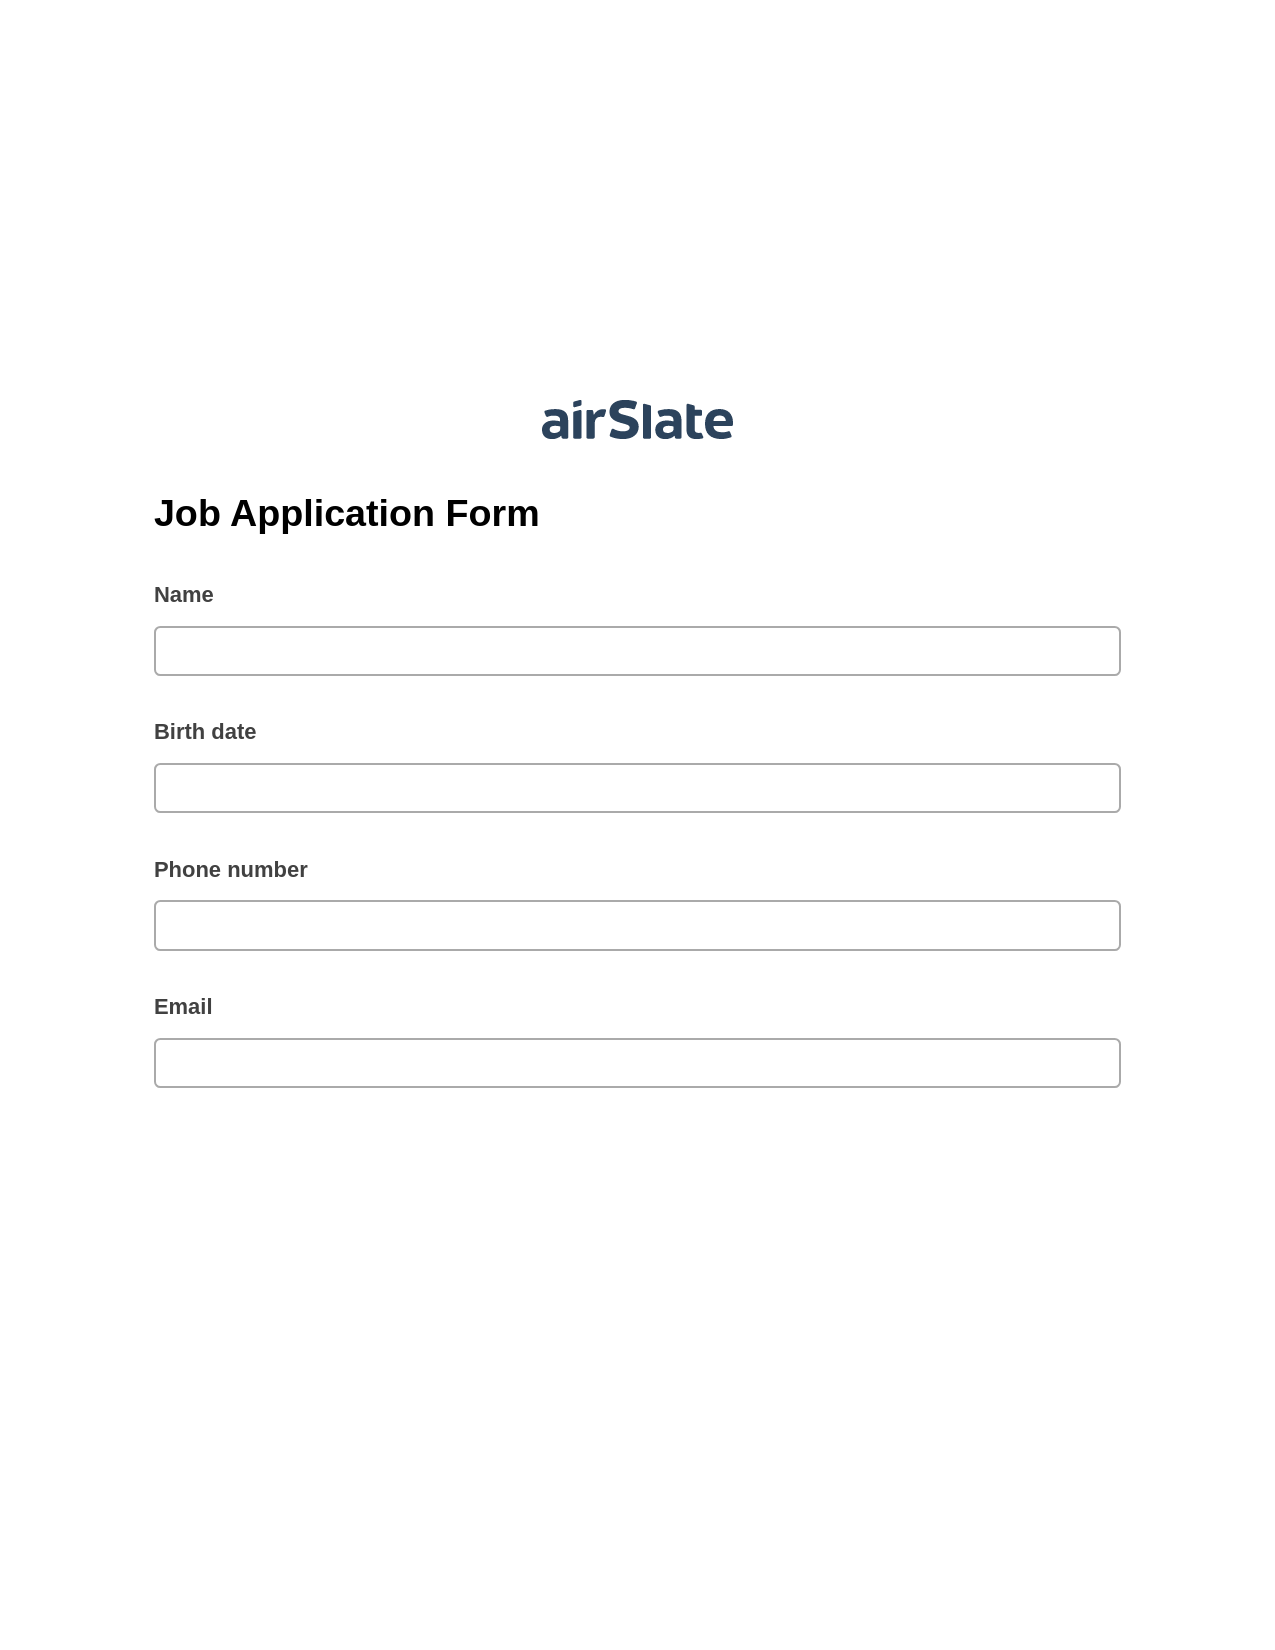 Multirole Job Application Form Pre-fill Slate from MS Dynamics 365 Records Bot, SendGrid send Campaign bot, Slack Two-Way Binding Bot